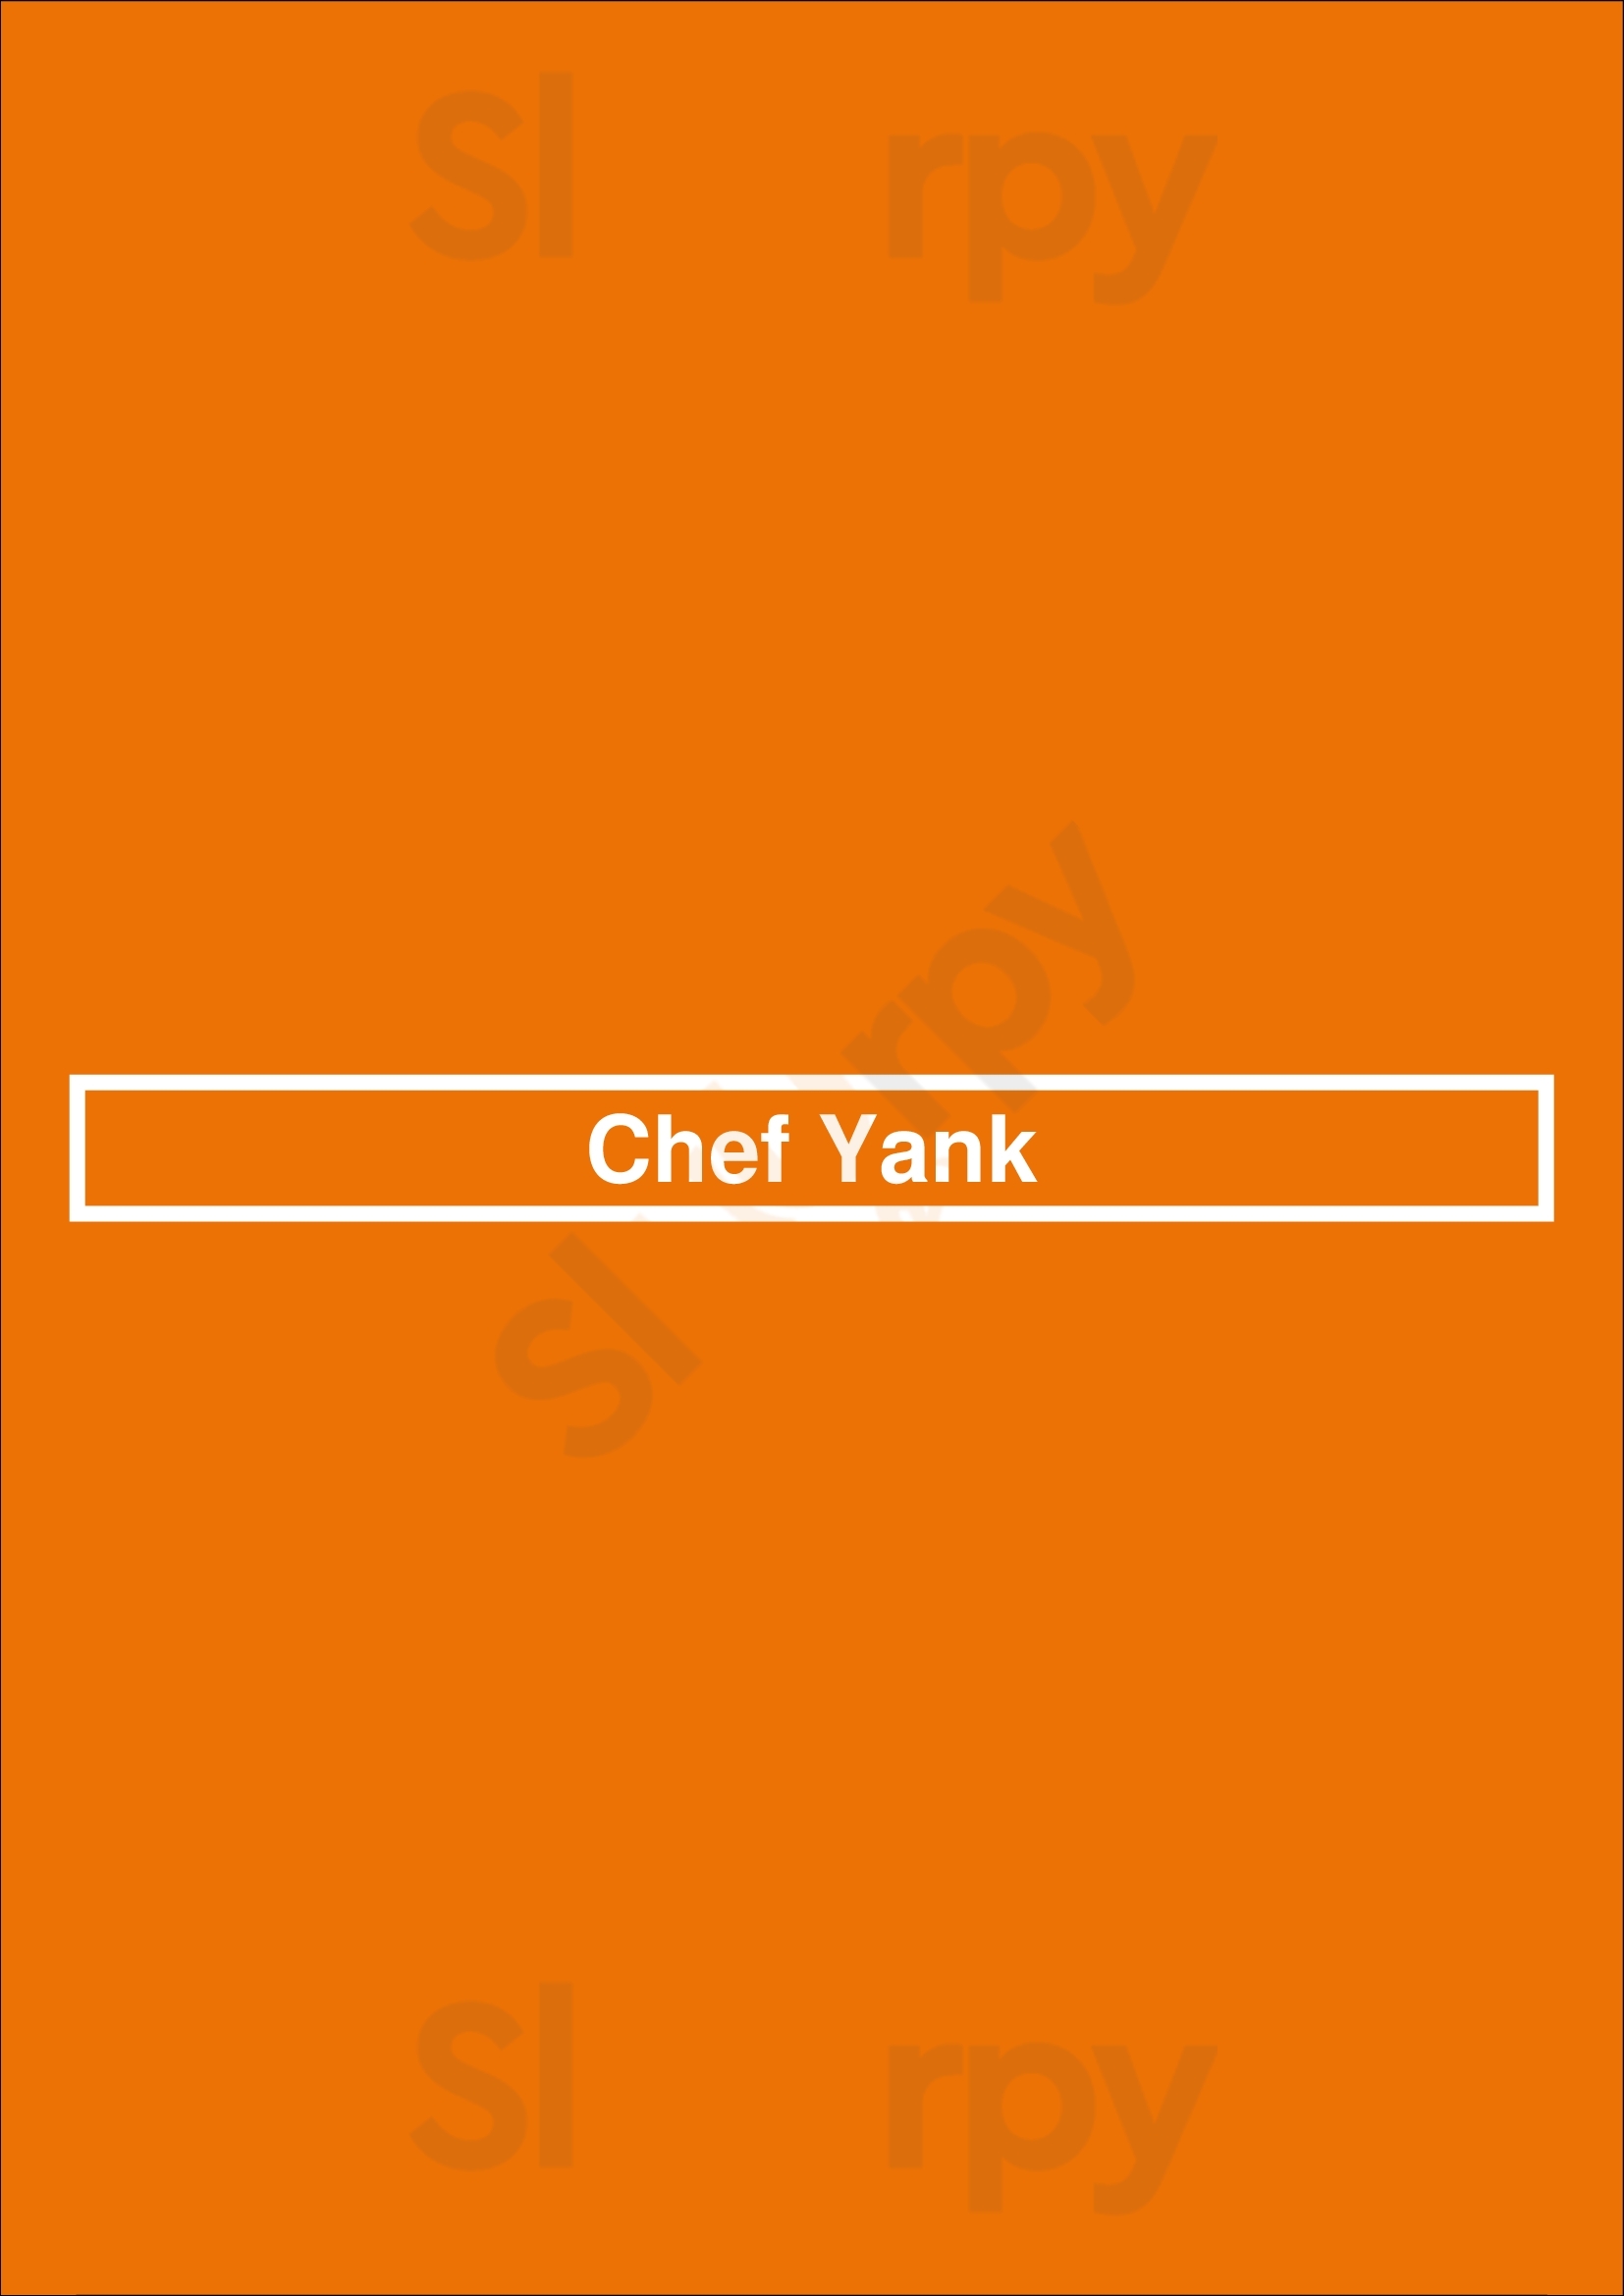 Chef Yank Miami Menu - 1